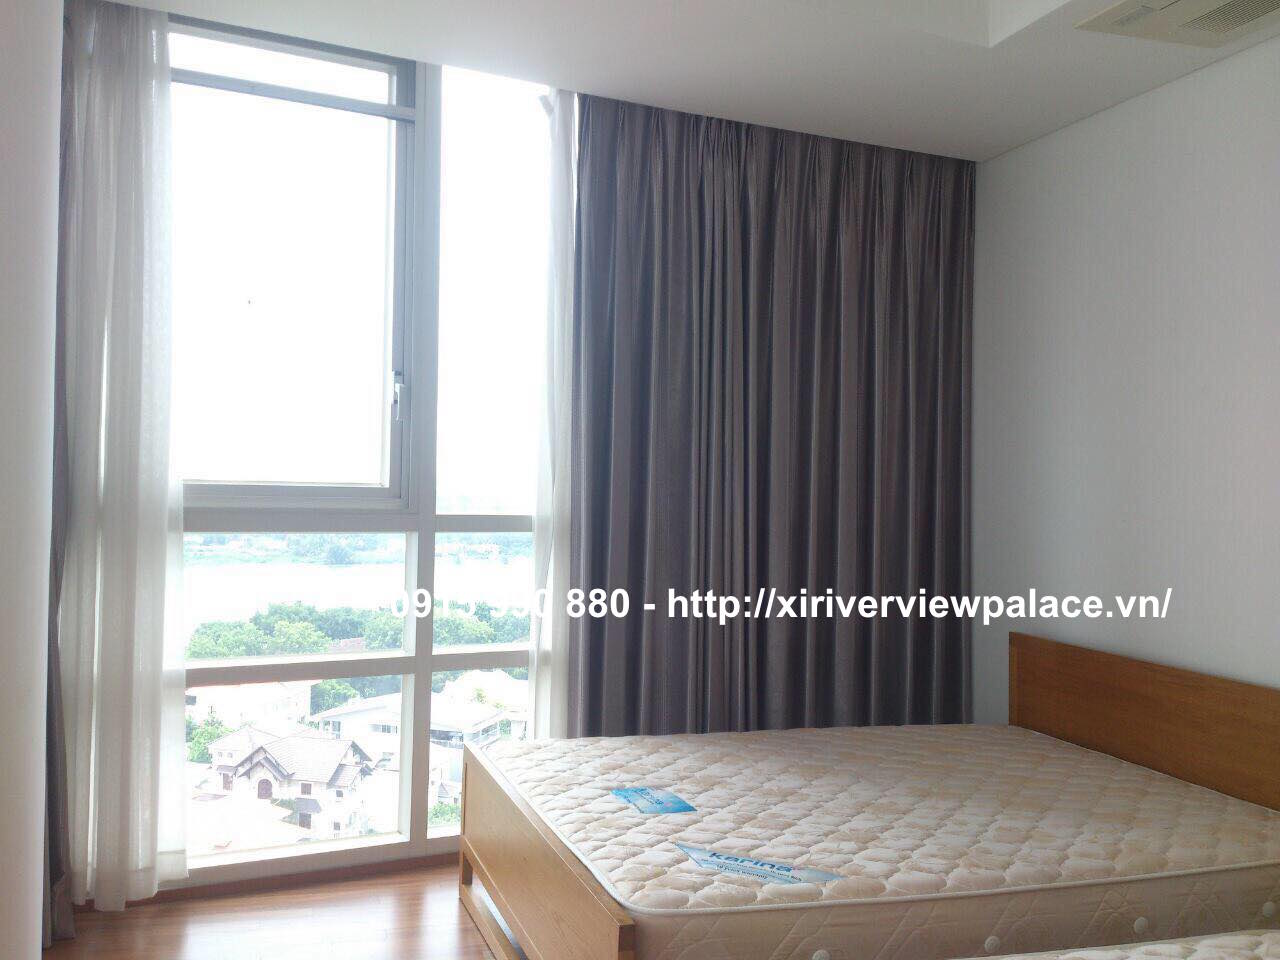 Cho thuê căn hộ Xi Riverview Palace - Xi Riverview Palace apartment for rent